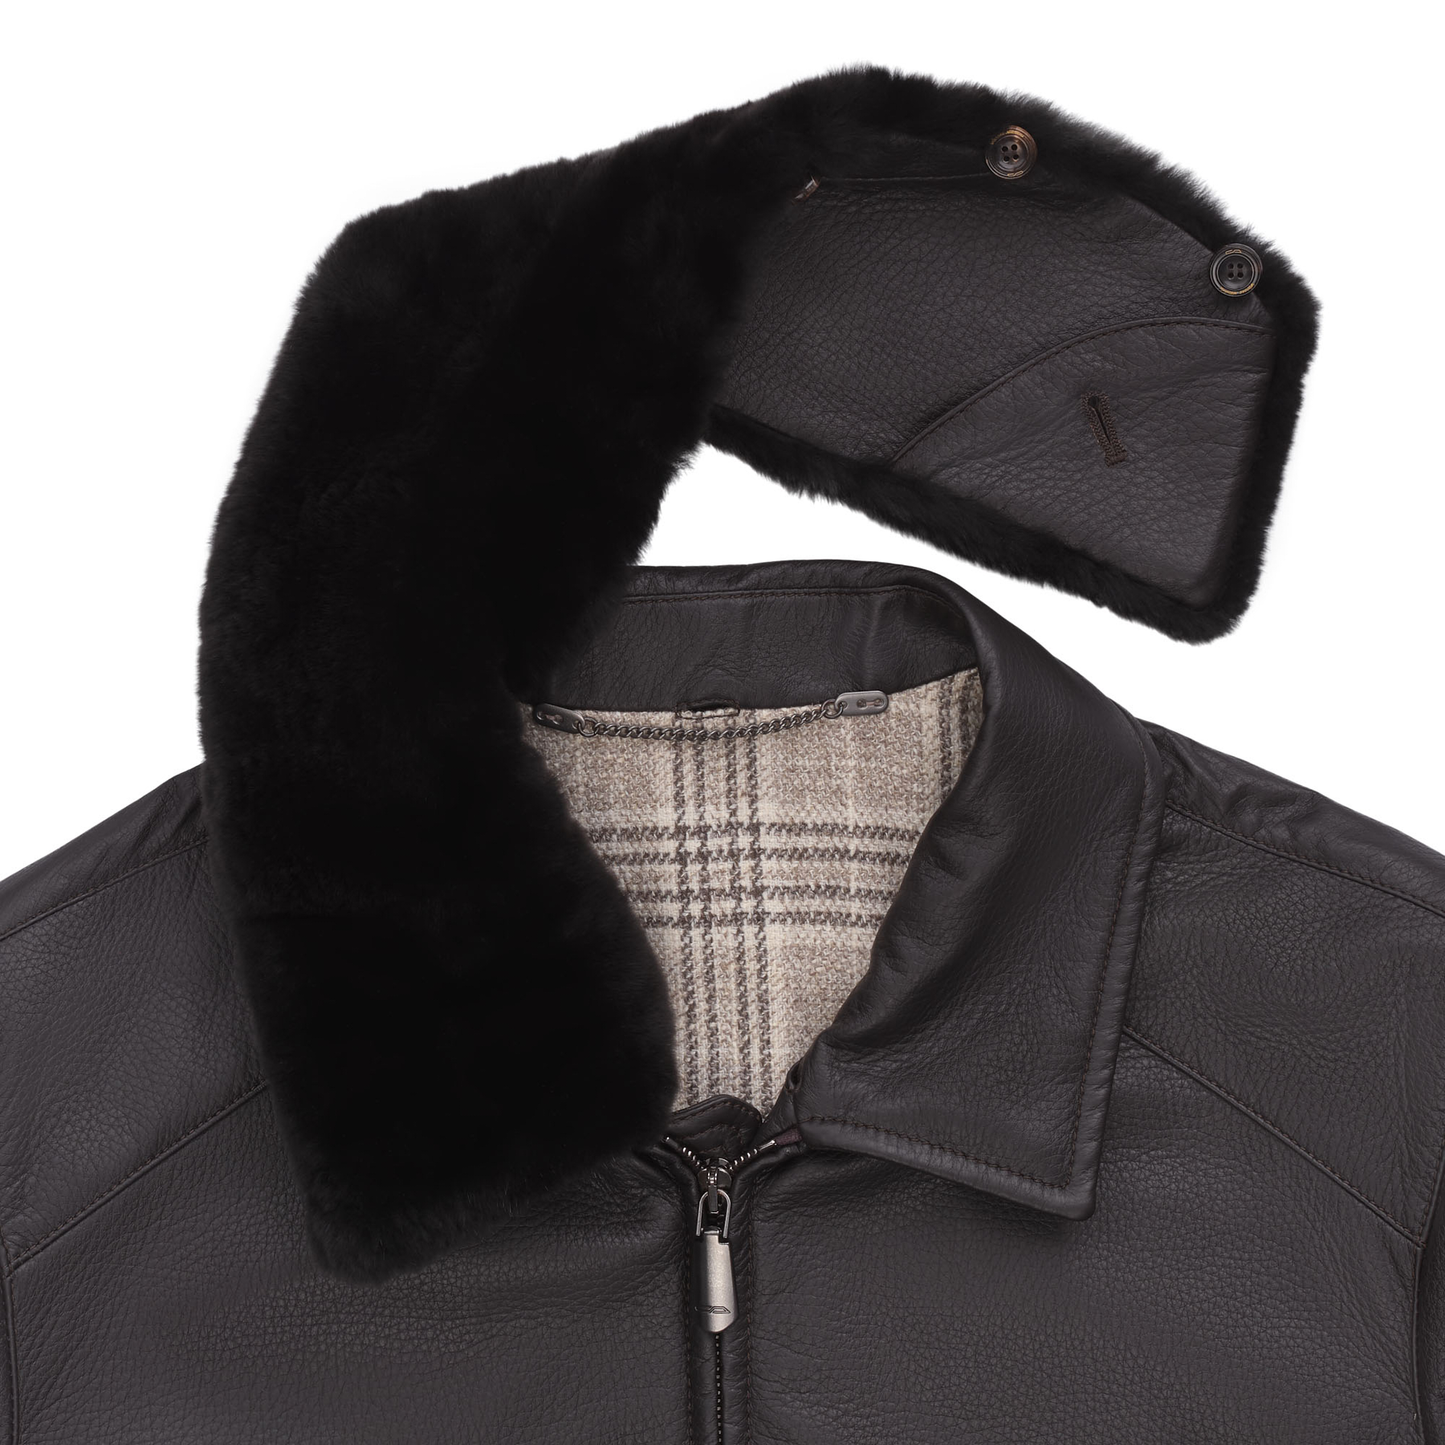 Cesare Attolini Leather Bomber Jacket with Fur Collar in Dark Grey - SARTALE